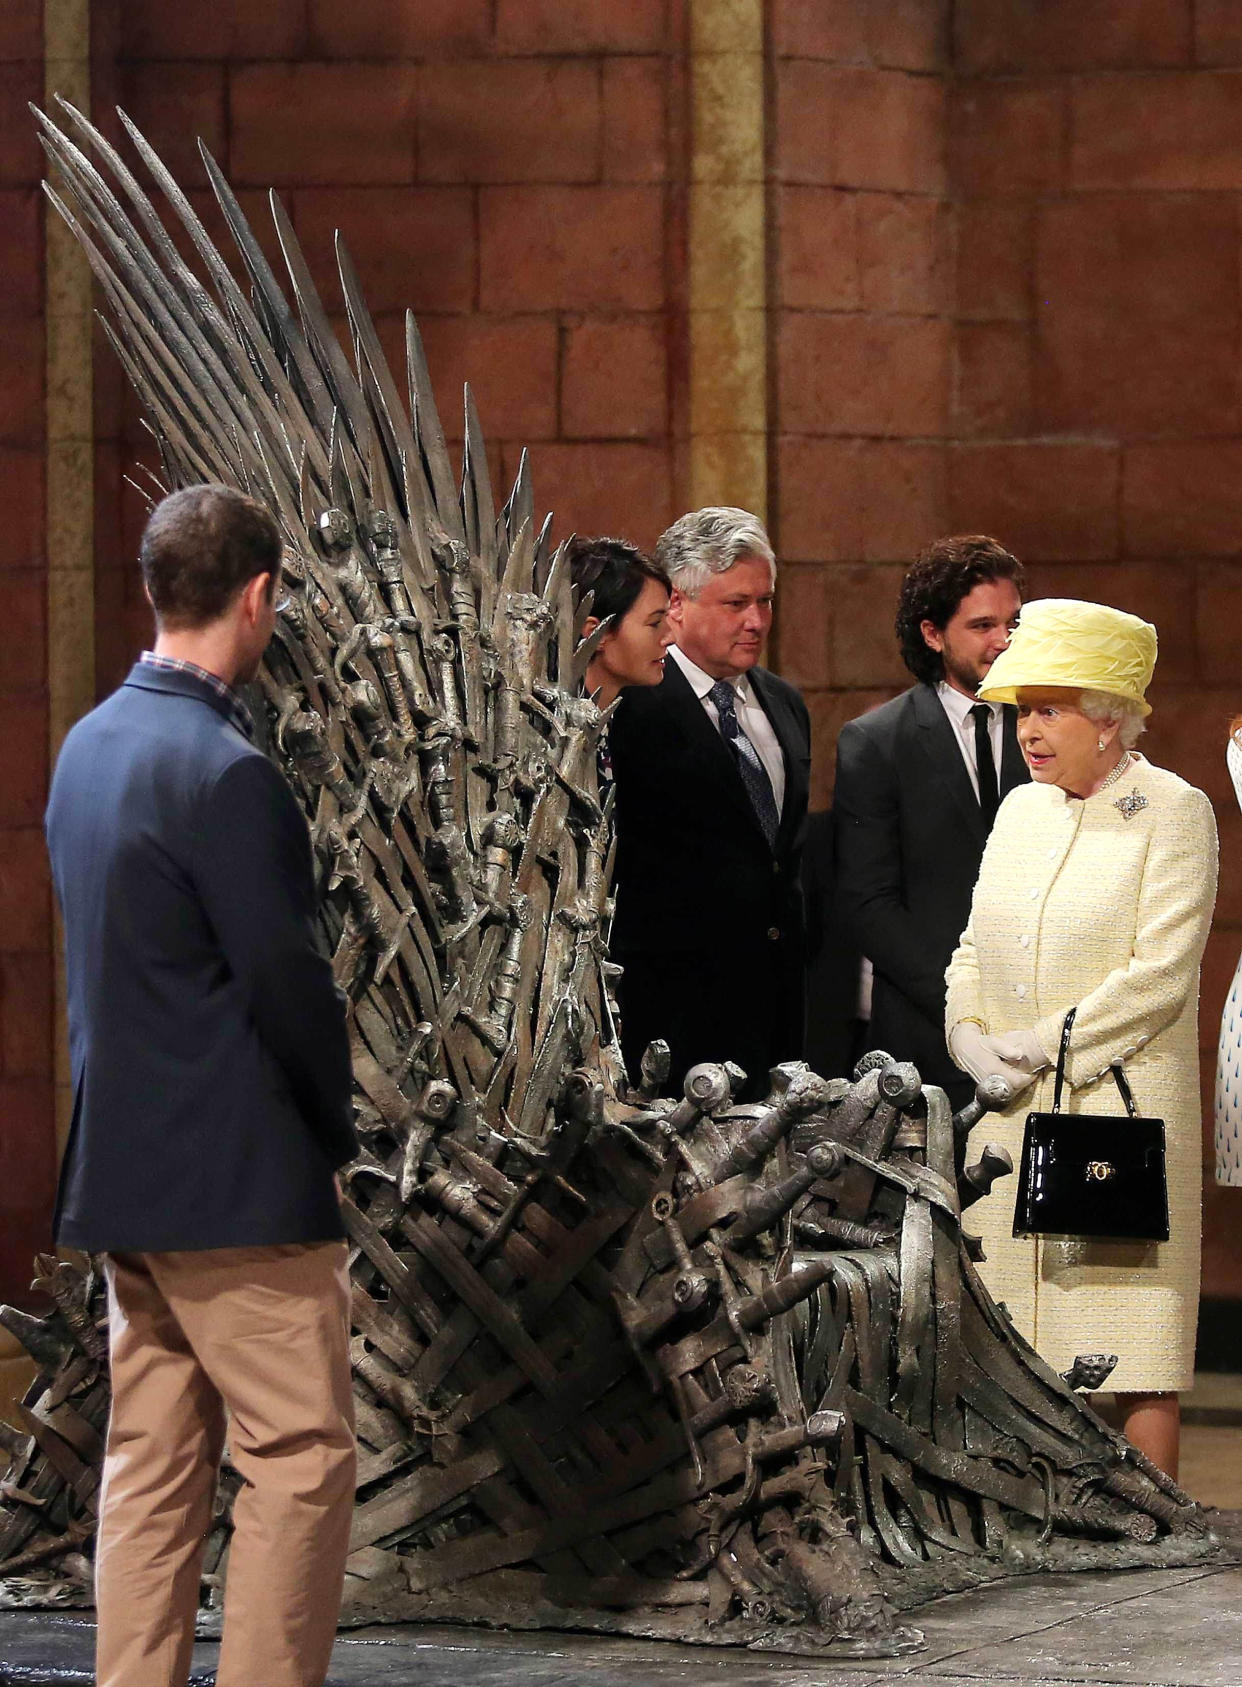 Queen Elizabeth II visits Game of Thrones set (WPA Pool / Getty Images)